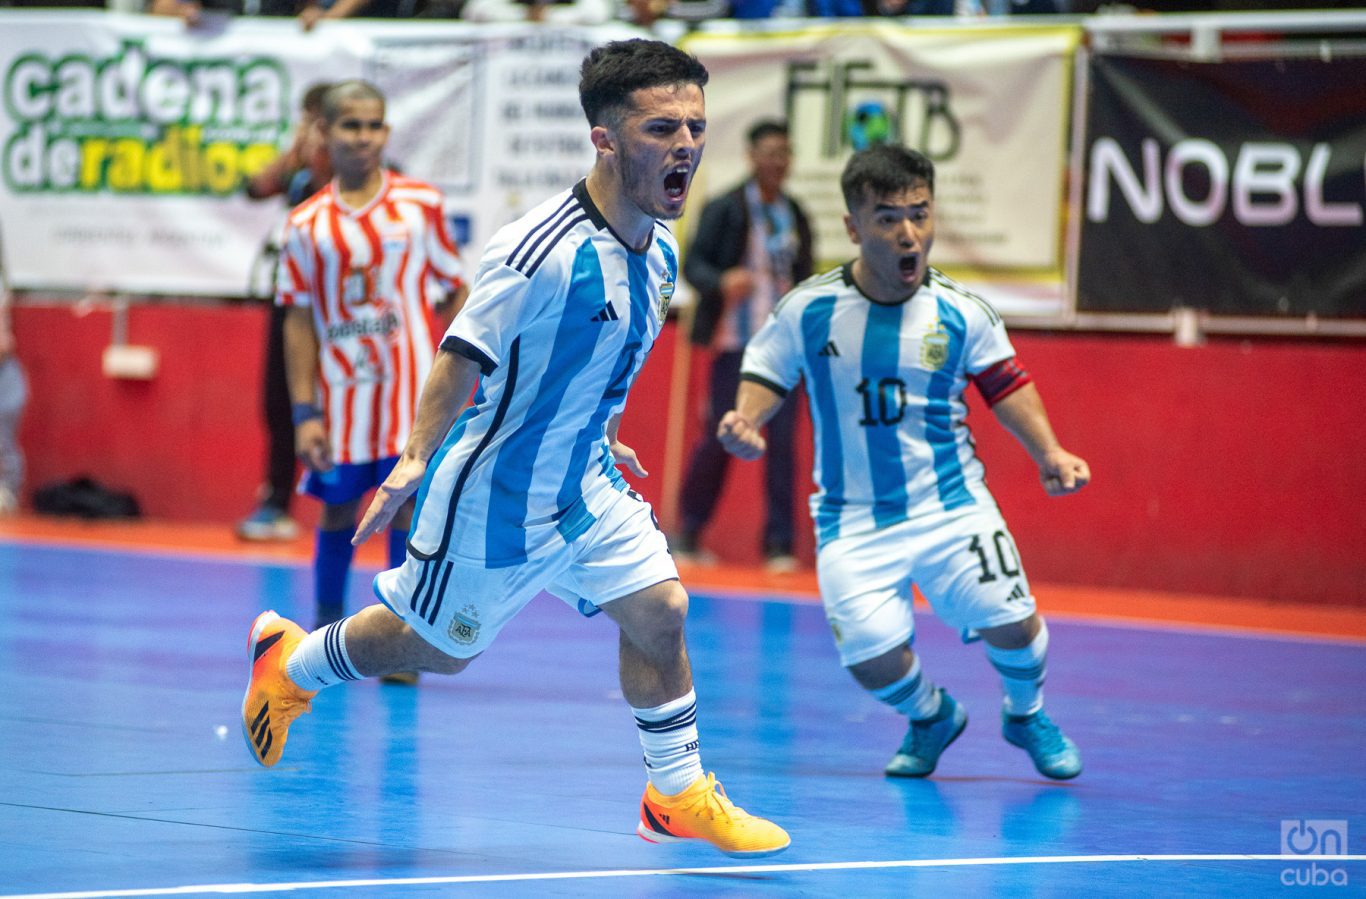 Grito de gol. Final del mundial de fútbol de talla baja entre Argentina y Paraguay. Foto: Kaloian.